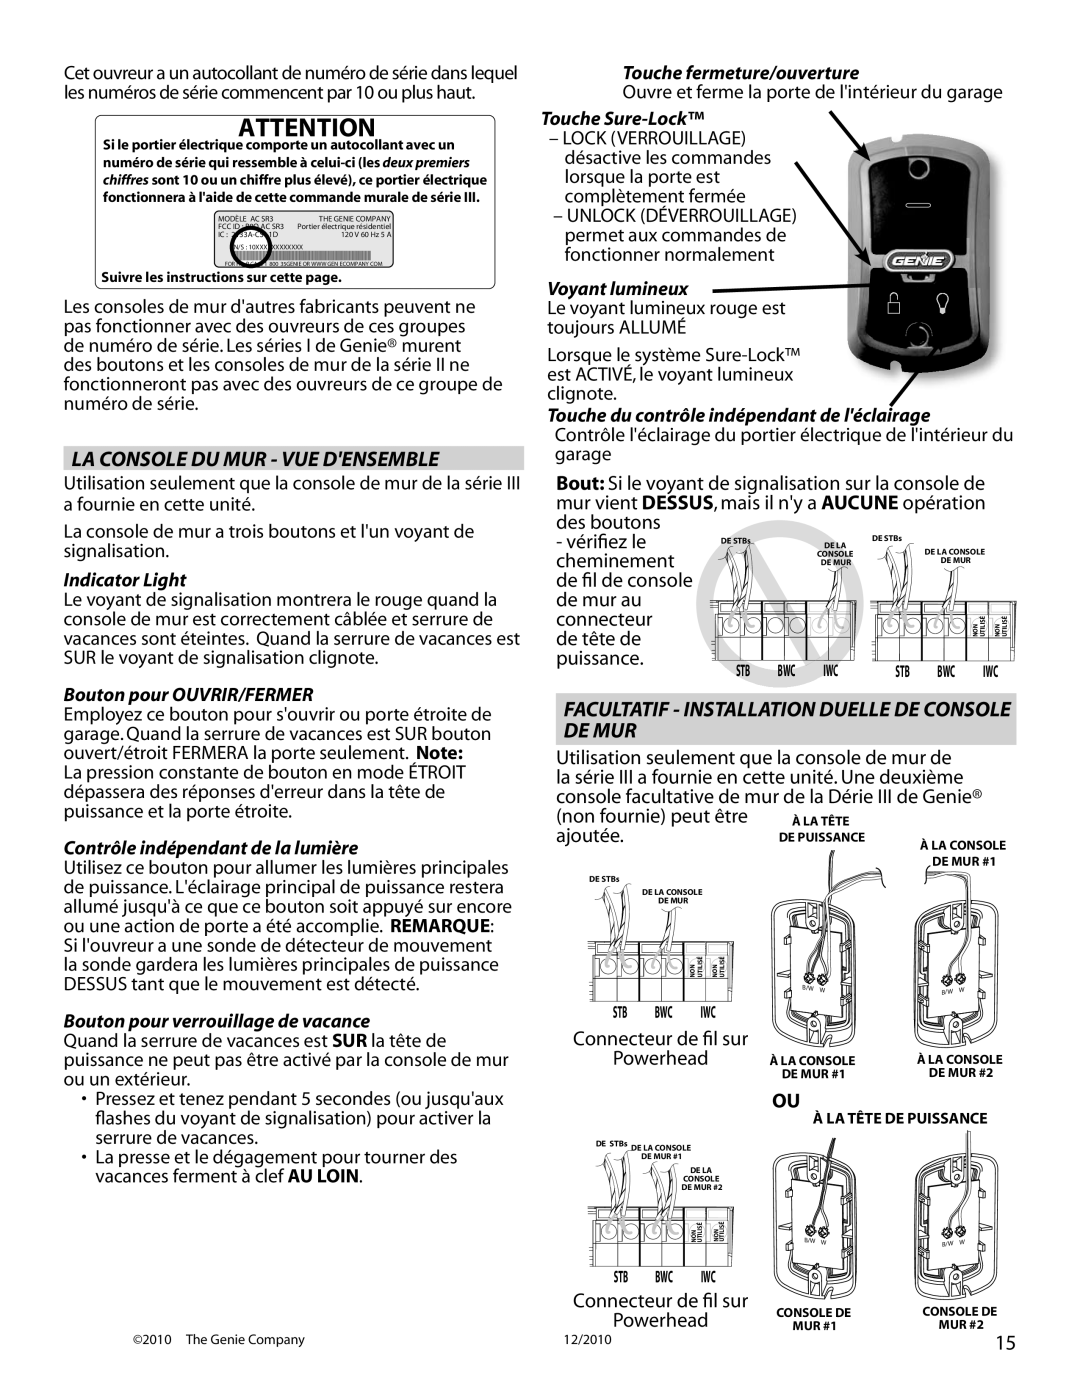 Genie 4042 manual La Console Du Mur - Vue Densemble, Facultatif - Installation Duelle De Console De Mur, Indicator Light 